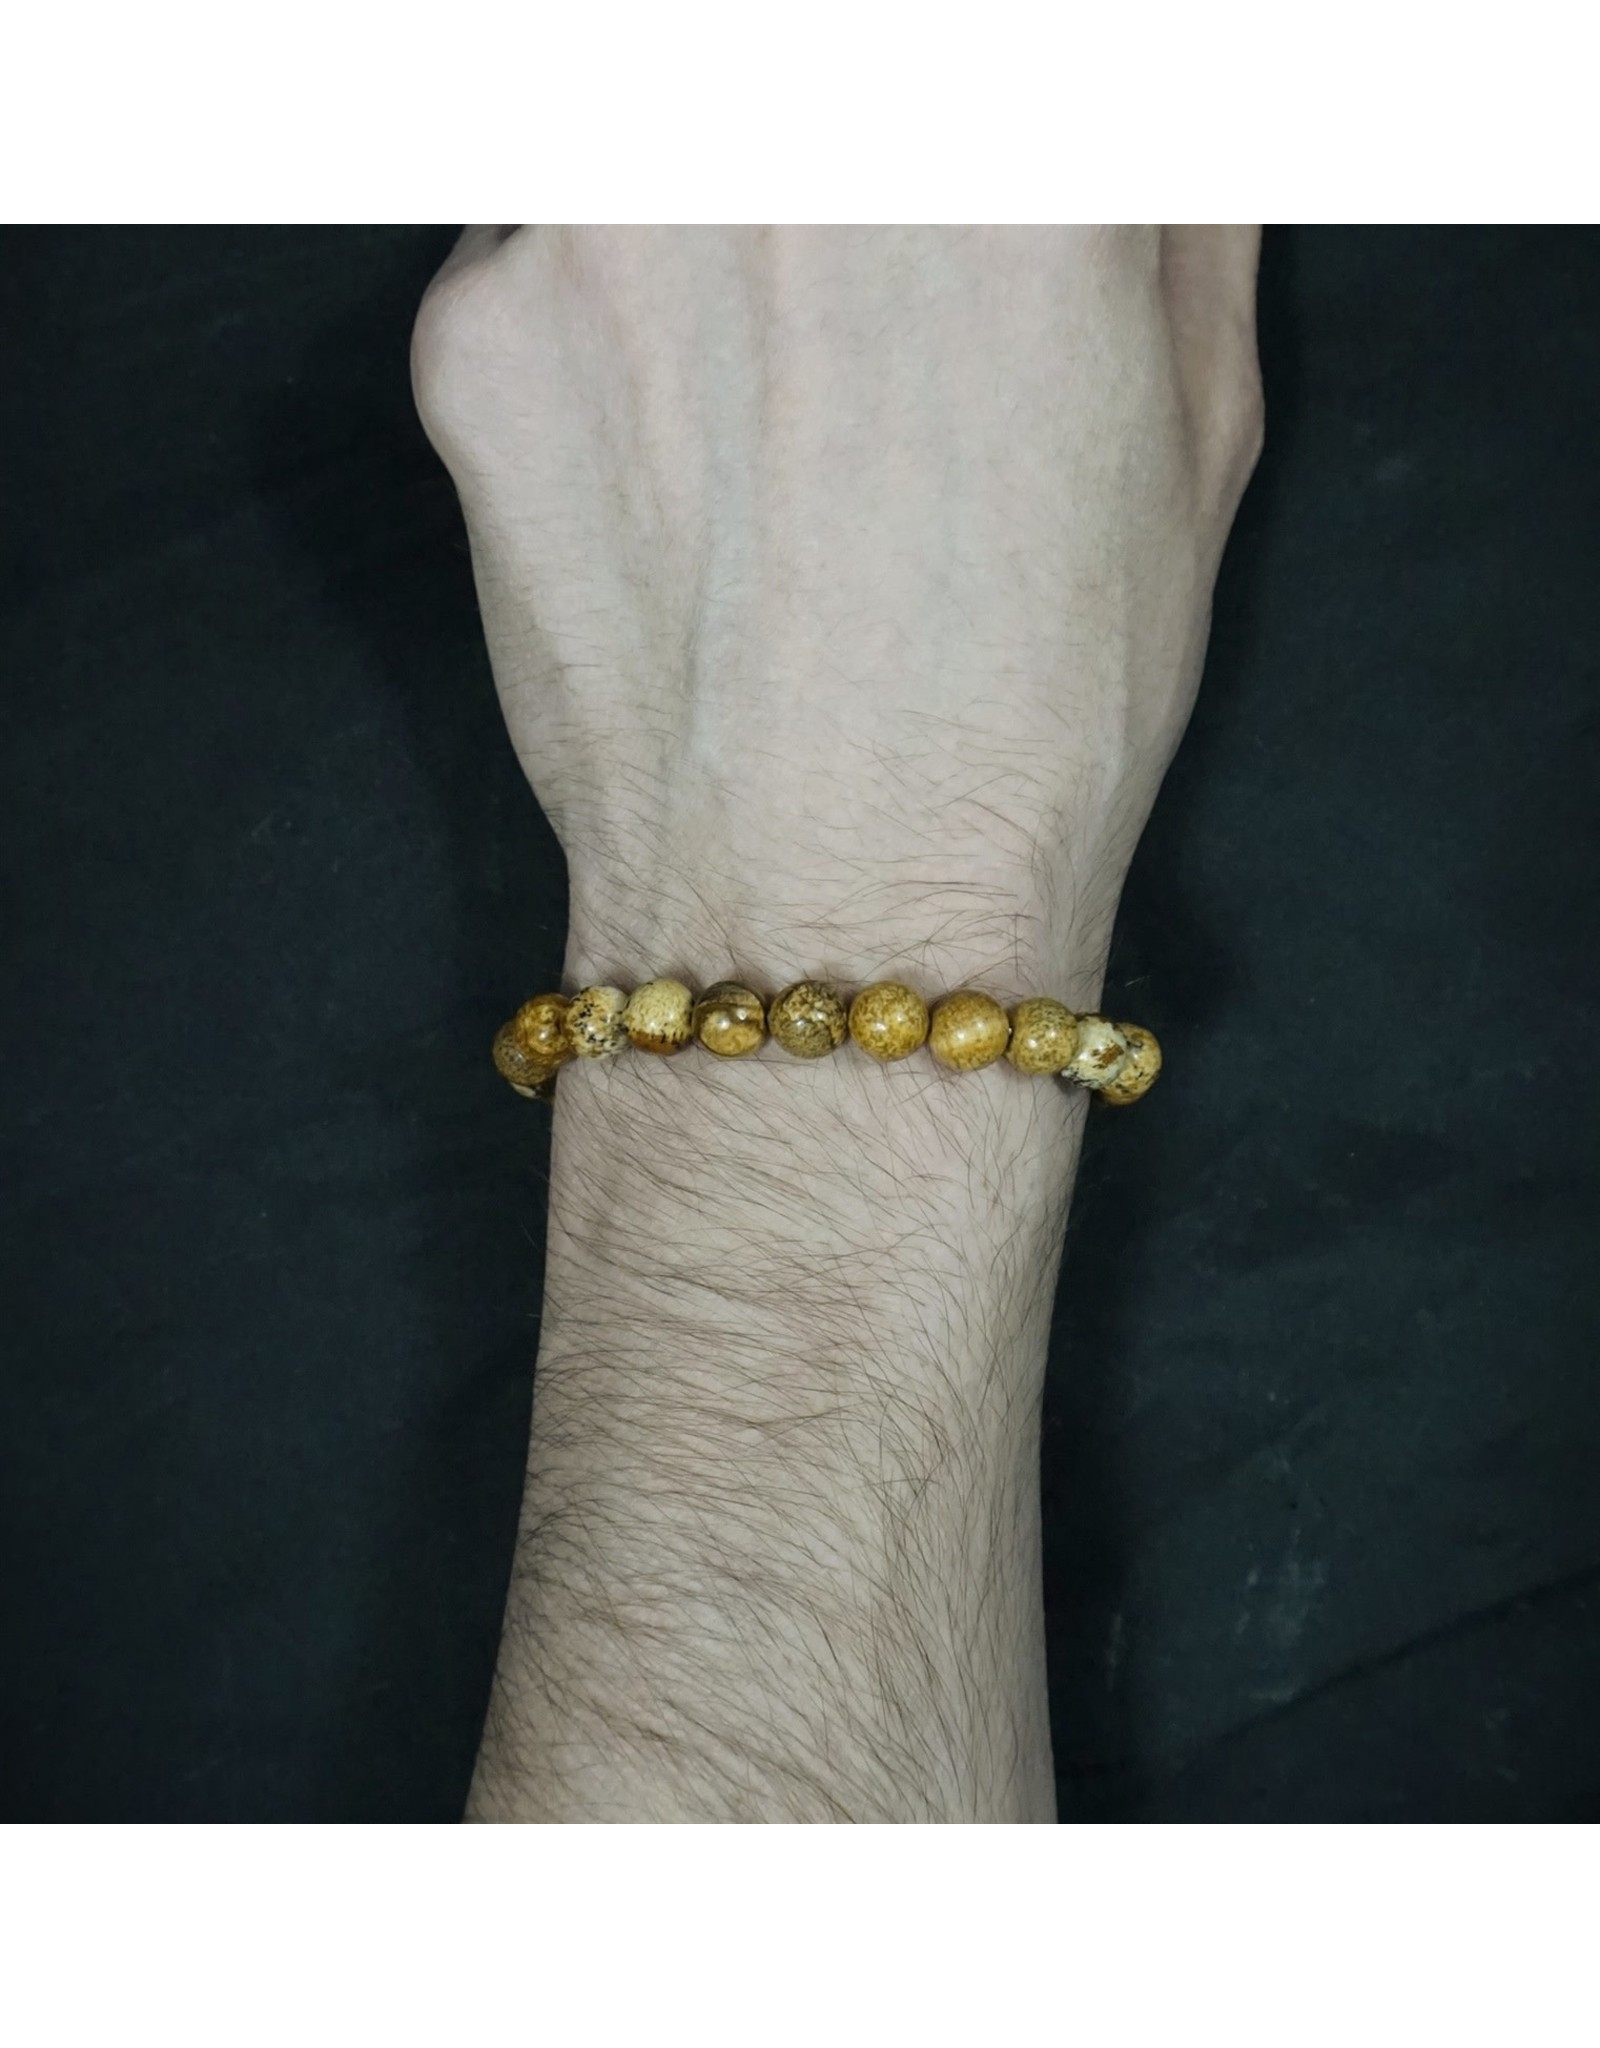 Elastic Bracelet 8mm Round Beads â€“ Picture Jasper